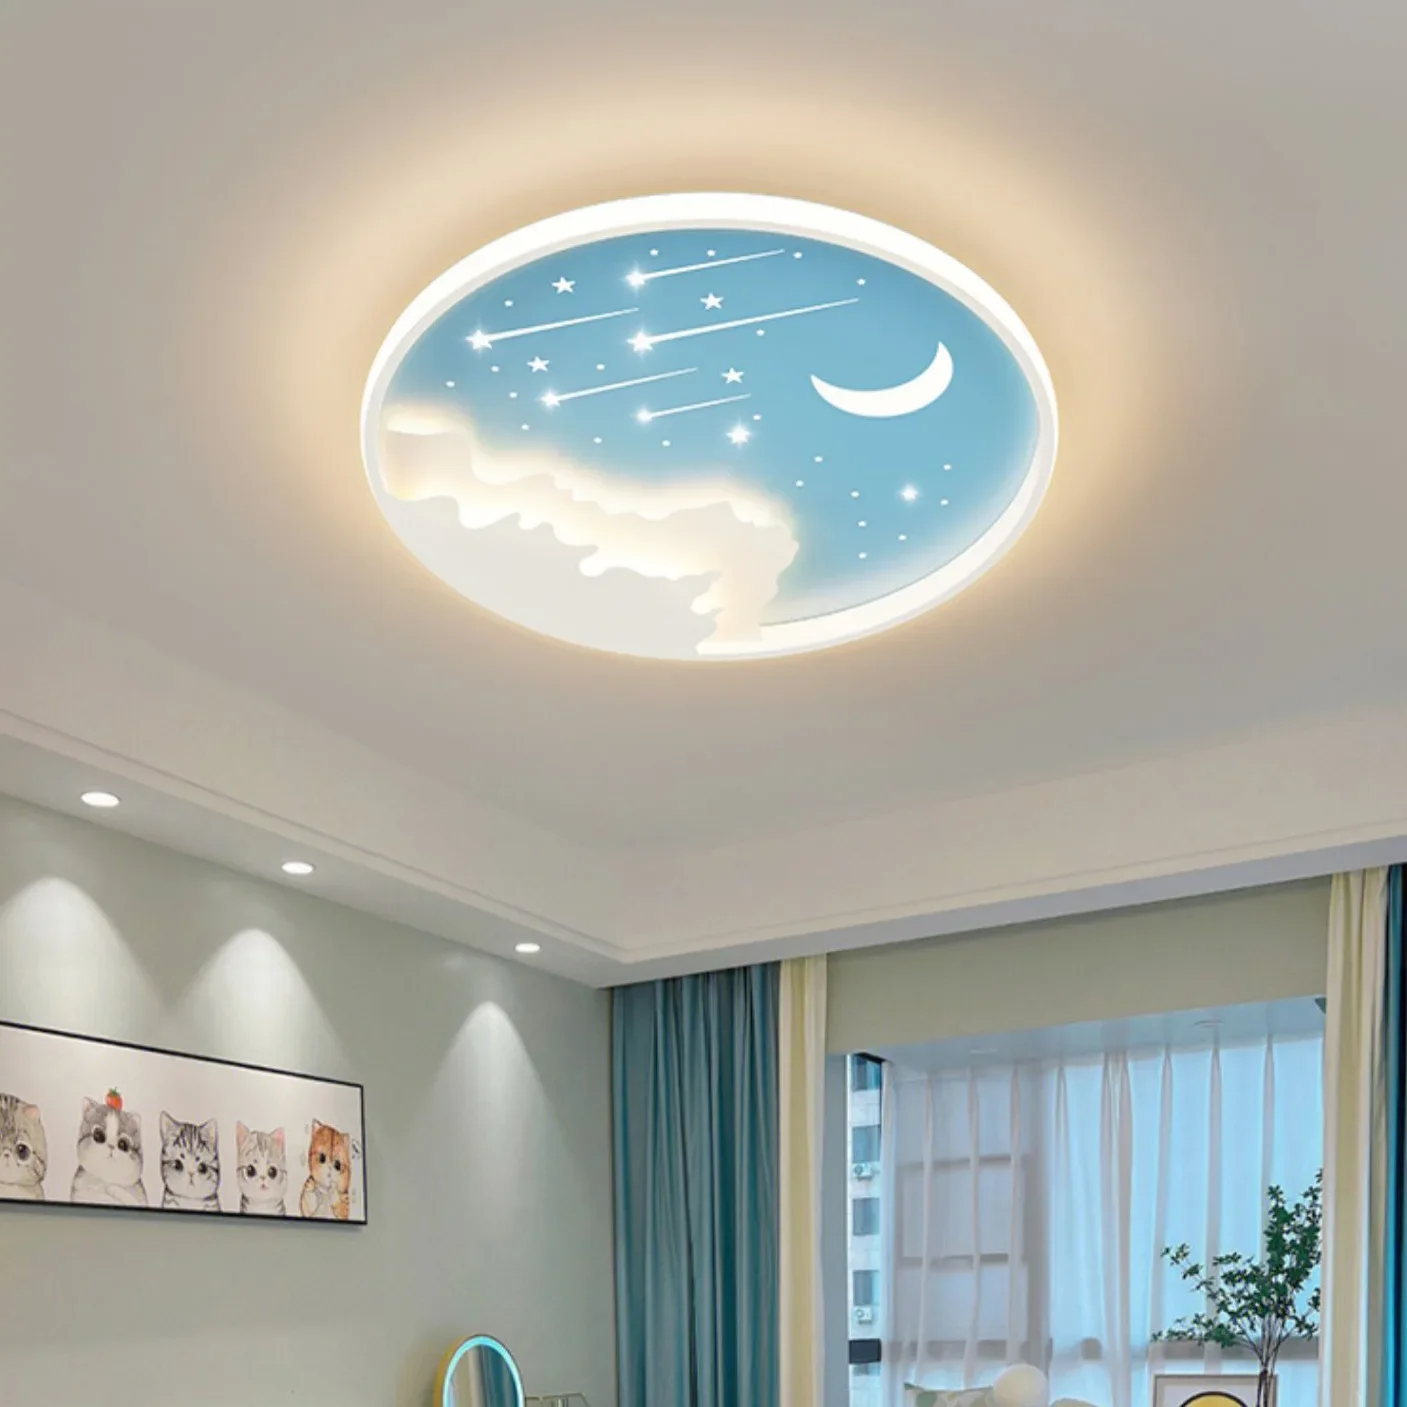 

Modern Simple Warm Ceiling Lamp for Kids Room Bedroom Romantic Cartoon Moon Star Home Decoracion Lighting Round Design Luminaire